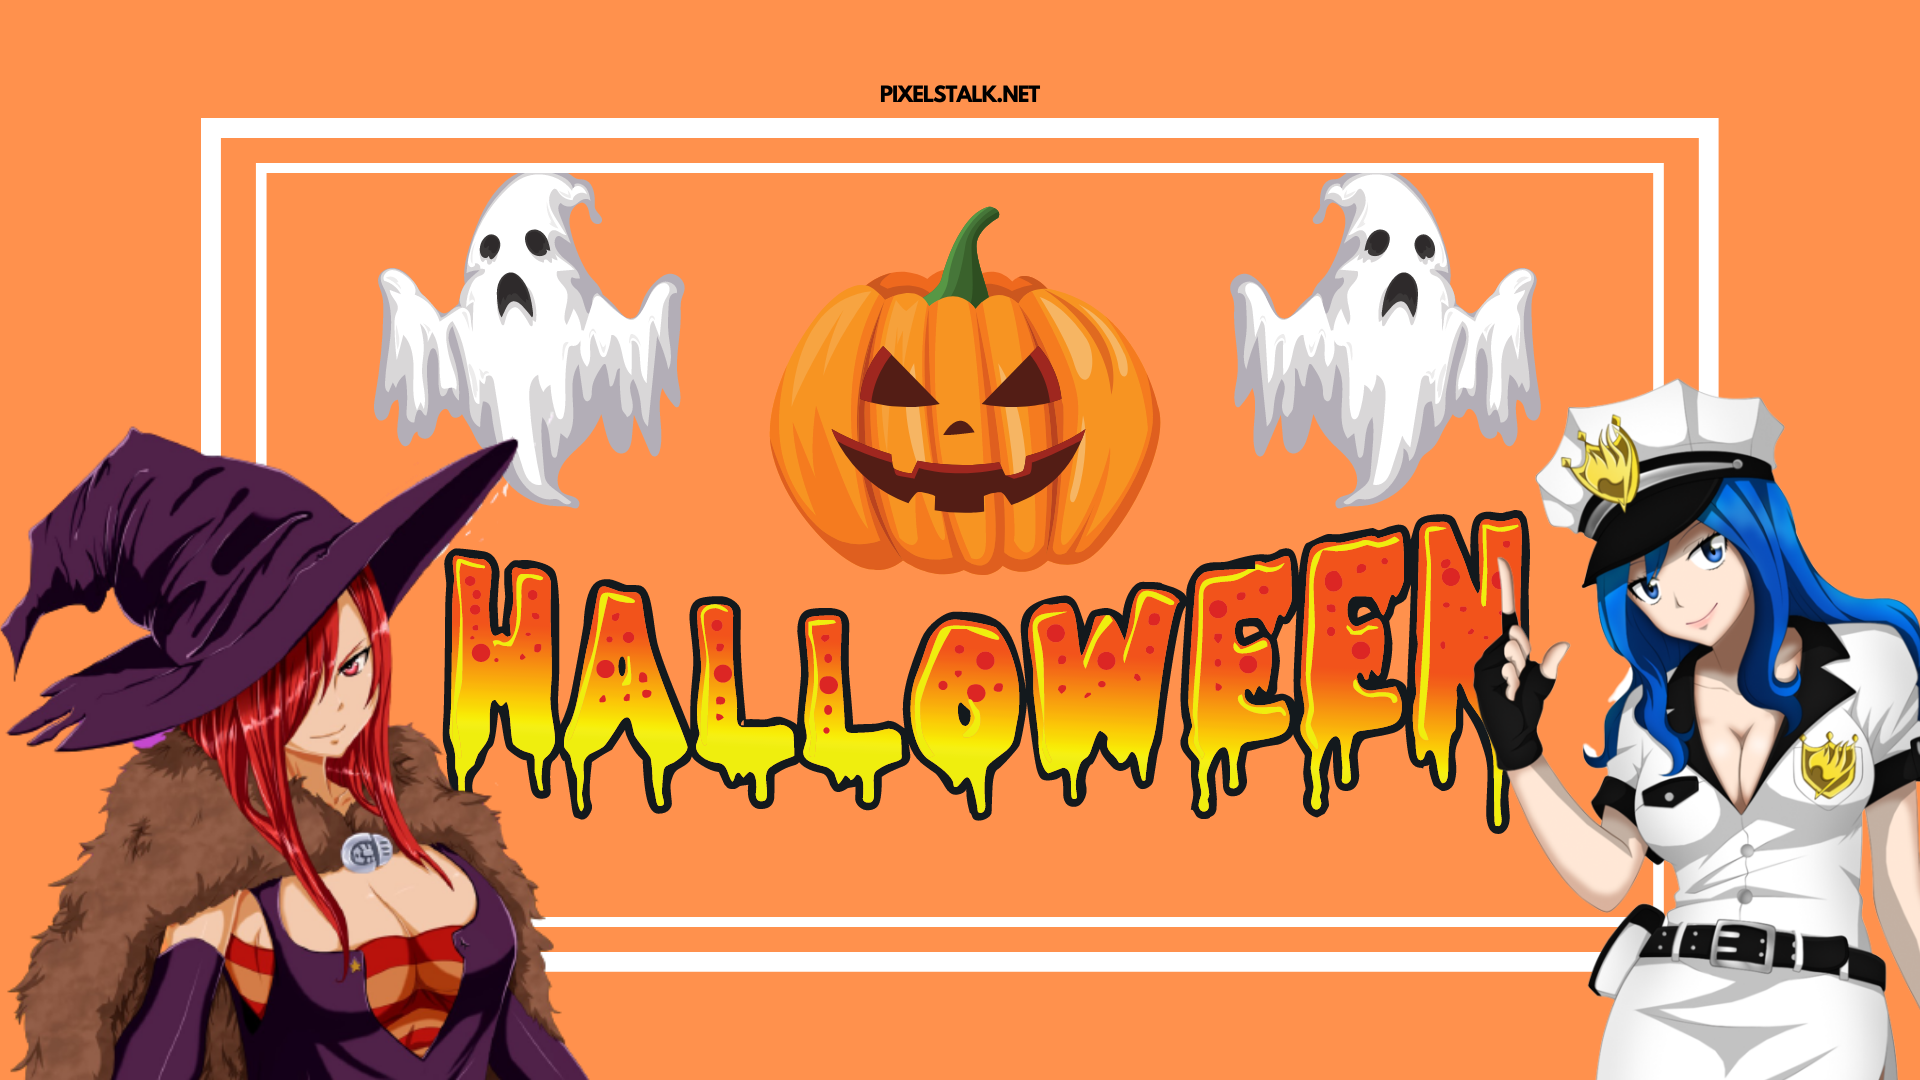 Happy Halloween 2021 Wallpaper HD free download